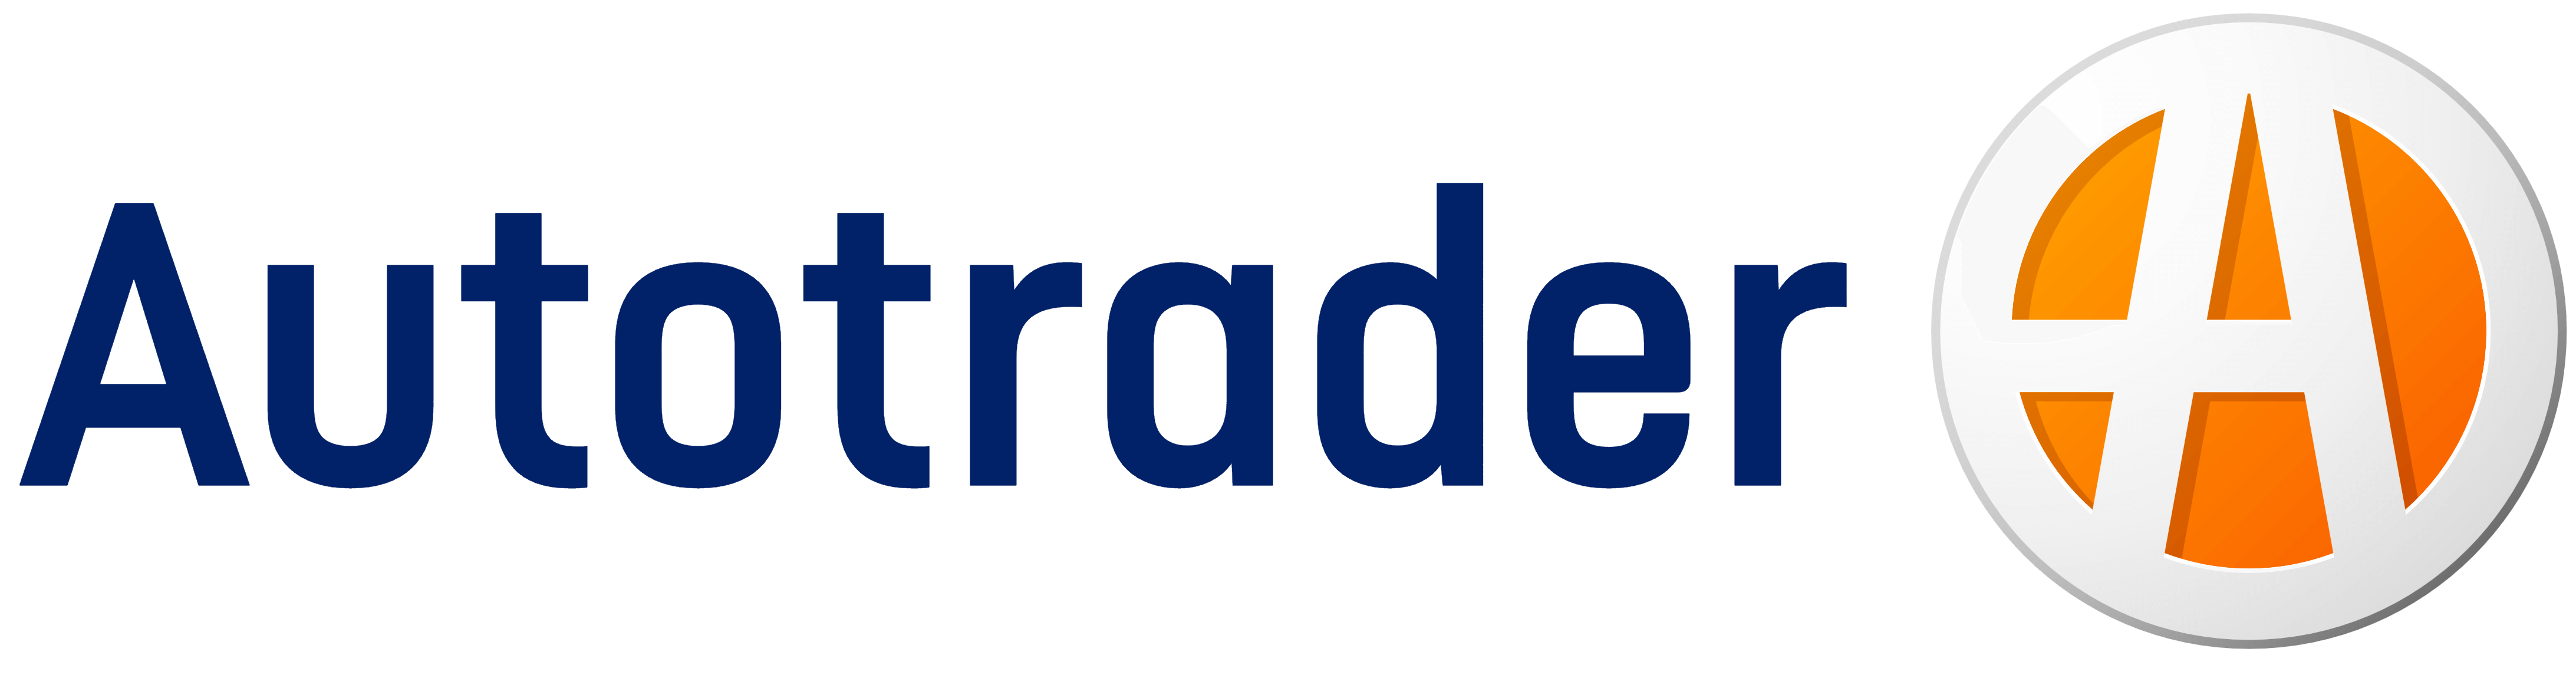 AutoTrader logo, logotype